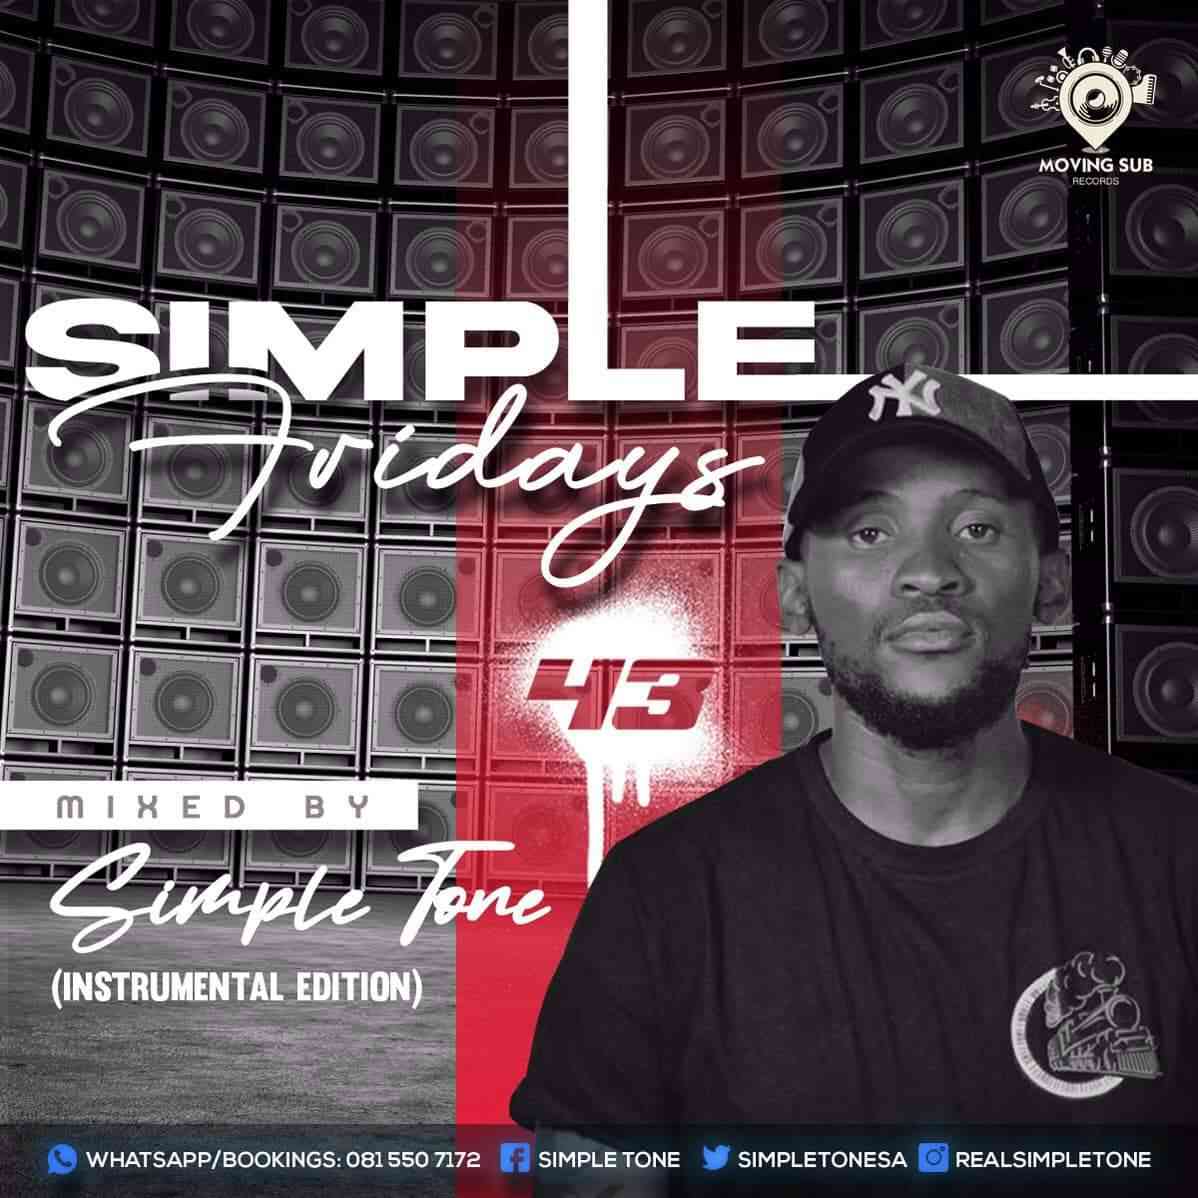 Simple Tone - Simple Fridays Vol 043 Mix (Instrumental Edition)